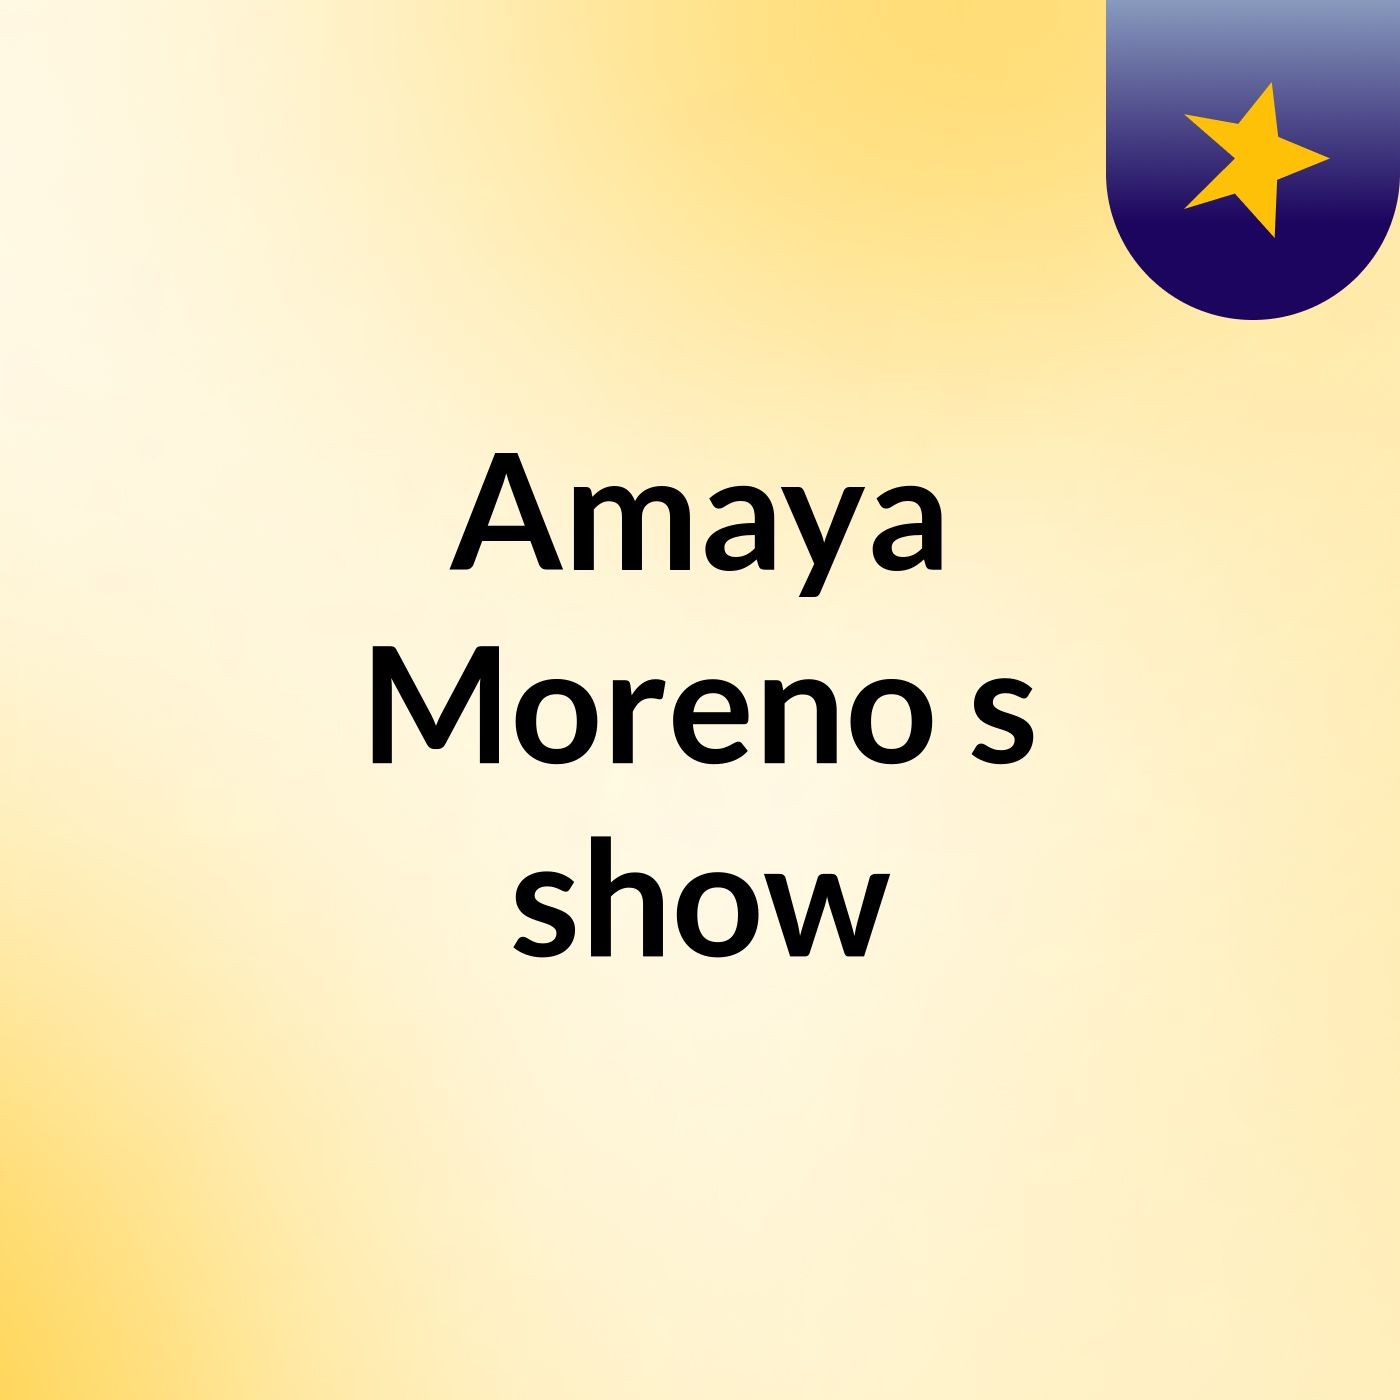 Amaya Moreno's show